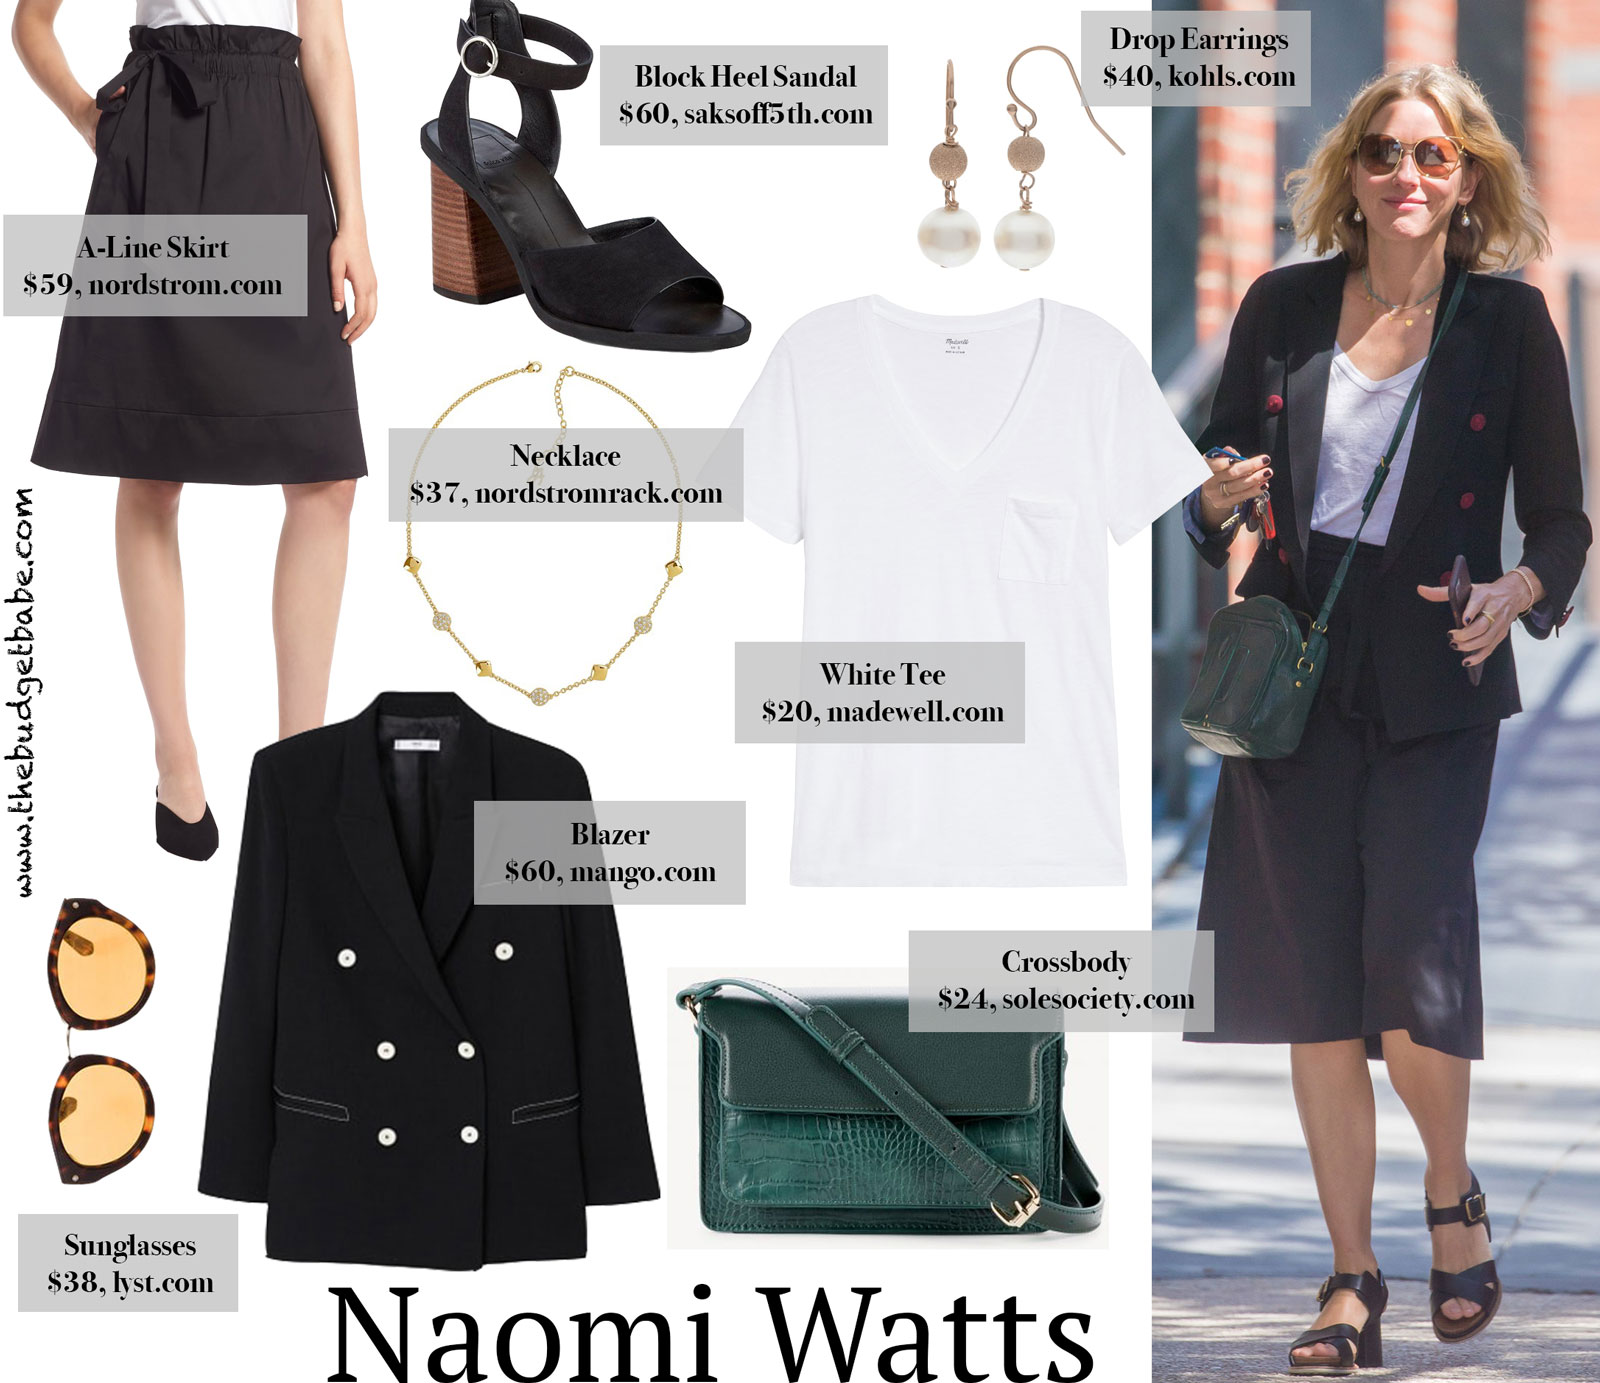 Naomi Watts Blazer, Green Crossbody Look for Less